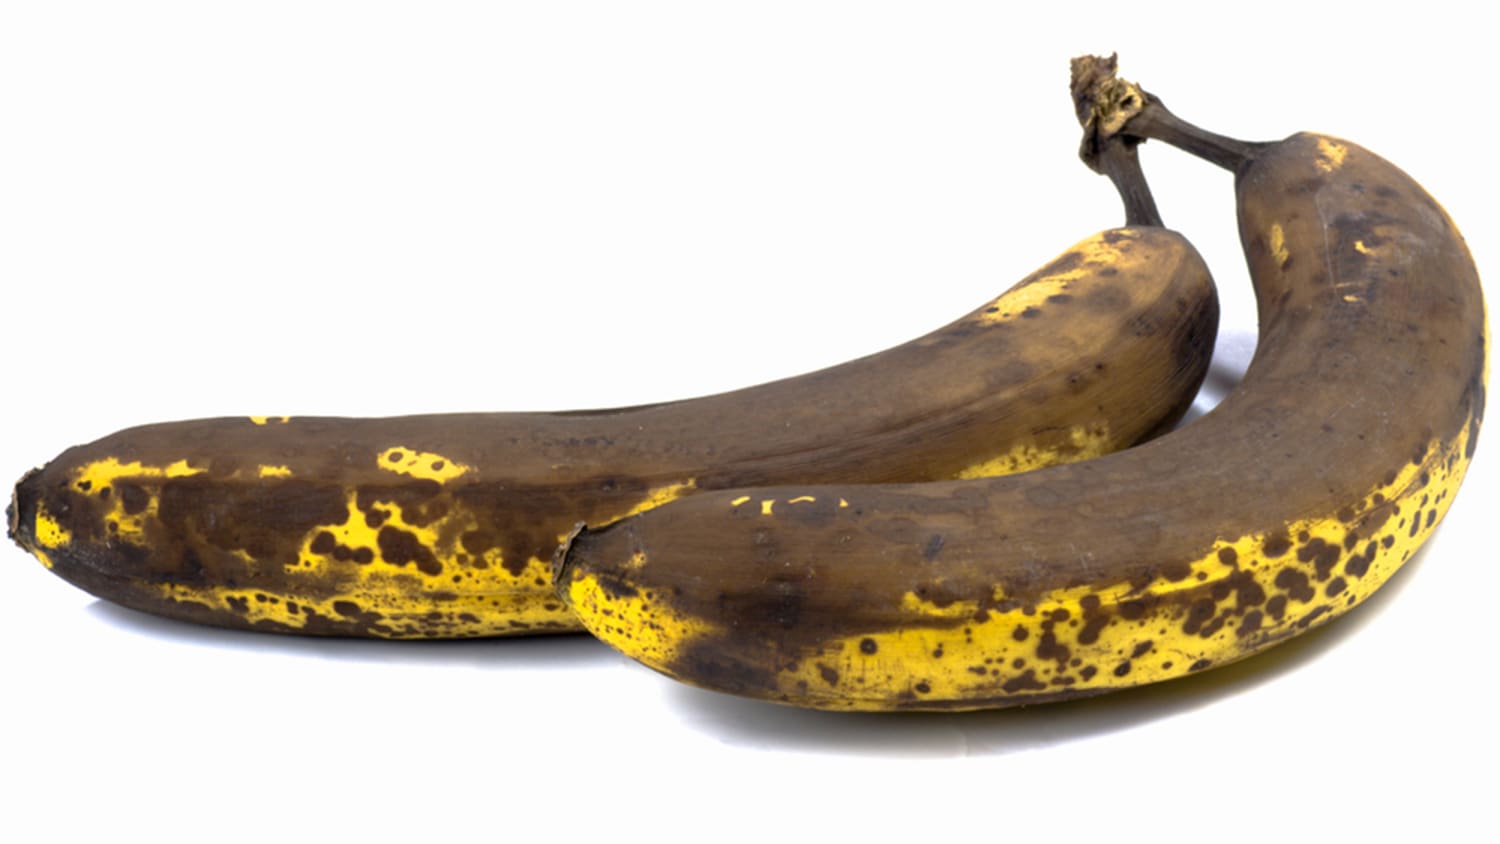 https://media-cldnry.s-nbcnews.com/image/upload/newscms/2015_28/673321/ripe-banana-bananas-stock-today-150710-tease.jpg